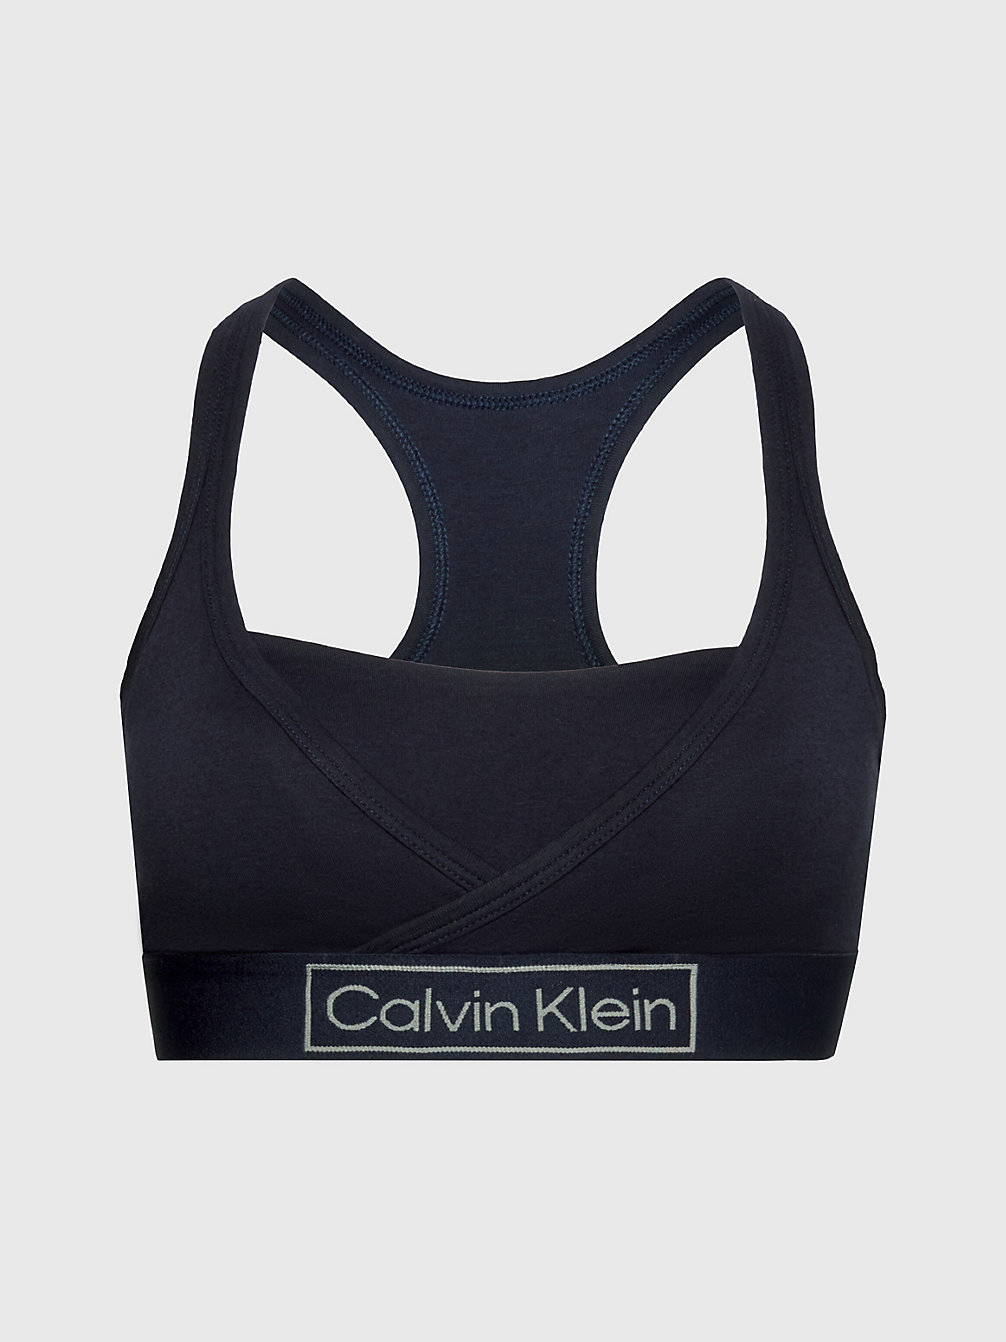 NIGHT SKY Voedingsbralette (Voedingsbh) - Reimagined Heritage undefined dames Calvin Klein